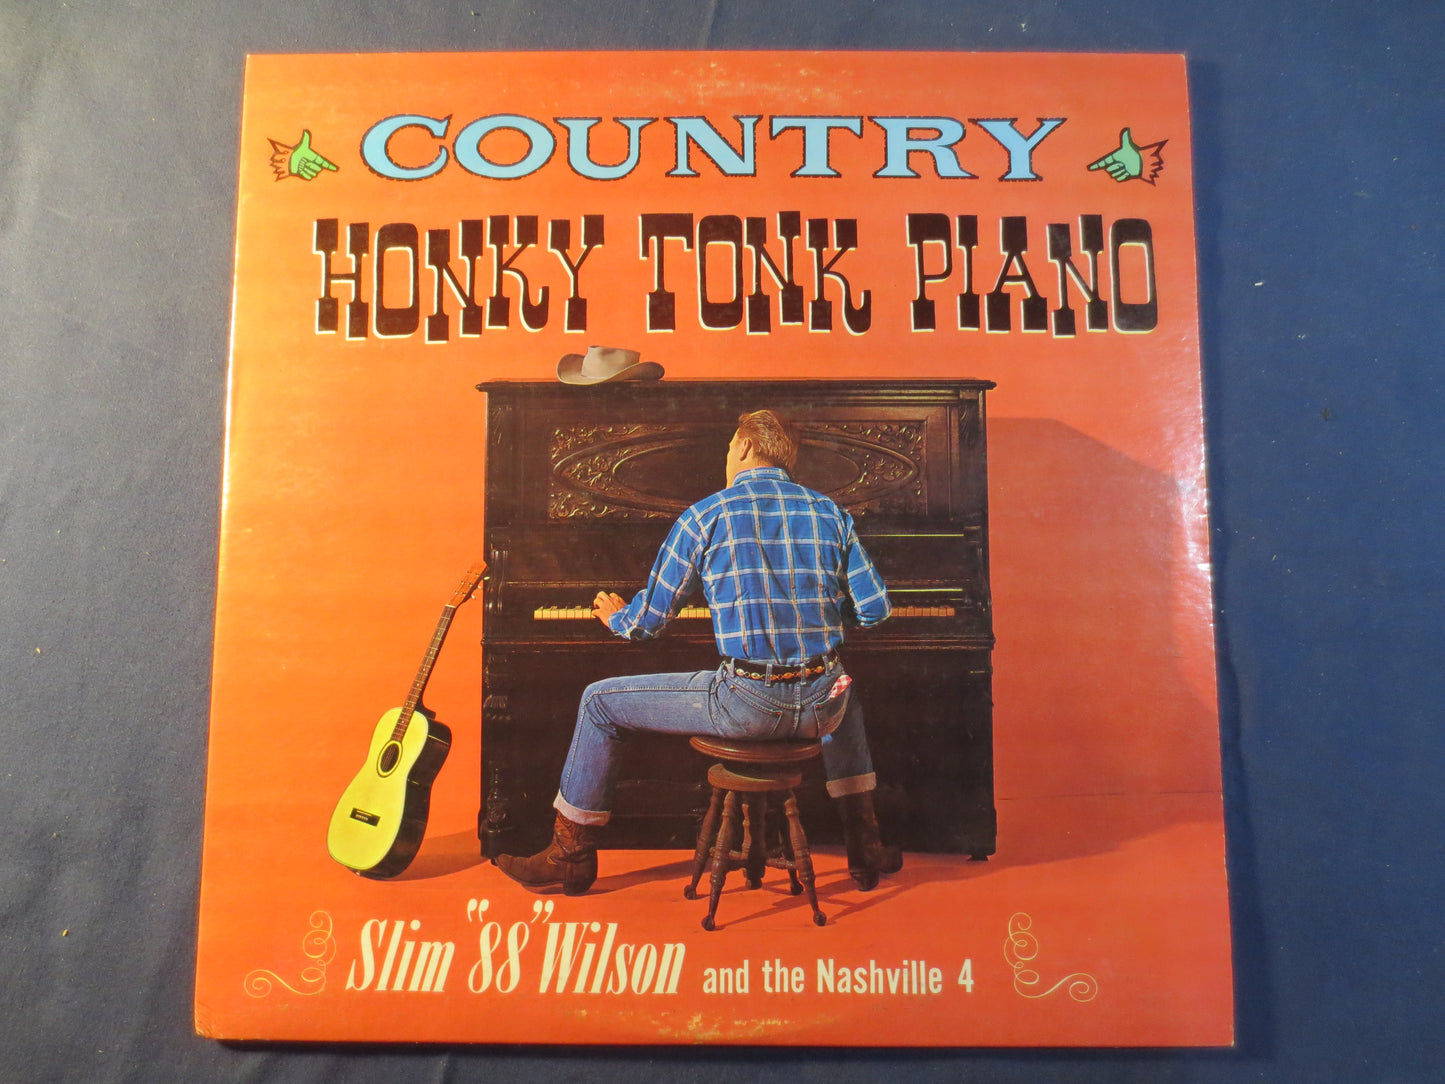 SLIM 88 WILSON, Country HONKY Tonk, Ragtime Records, Ragtime Piano, Honkytonk Piano, Record Vinyl, Record, Vinyl Record, Lp